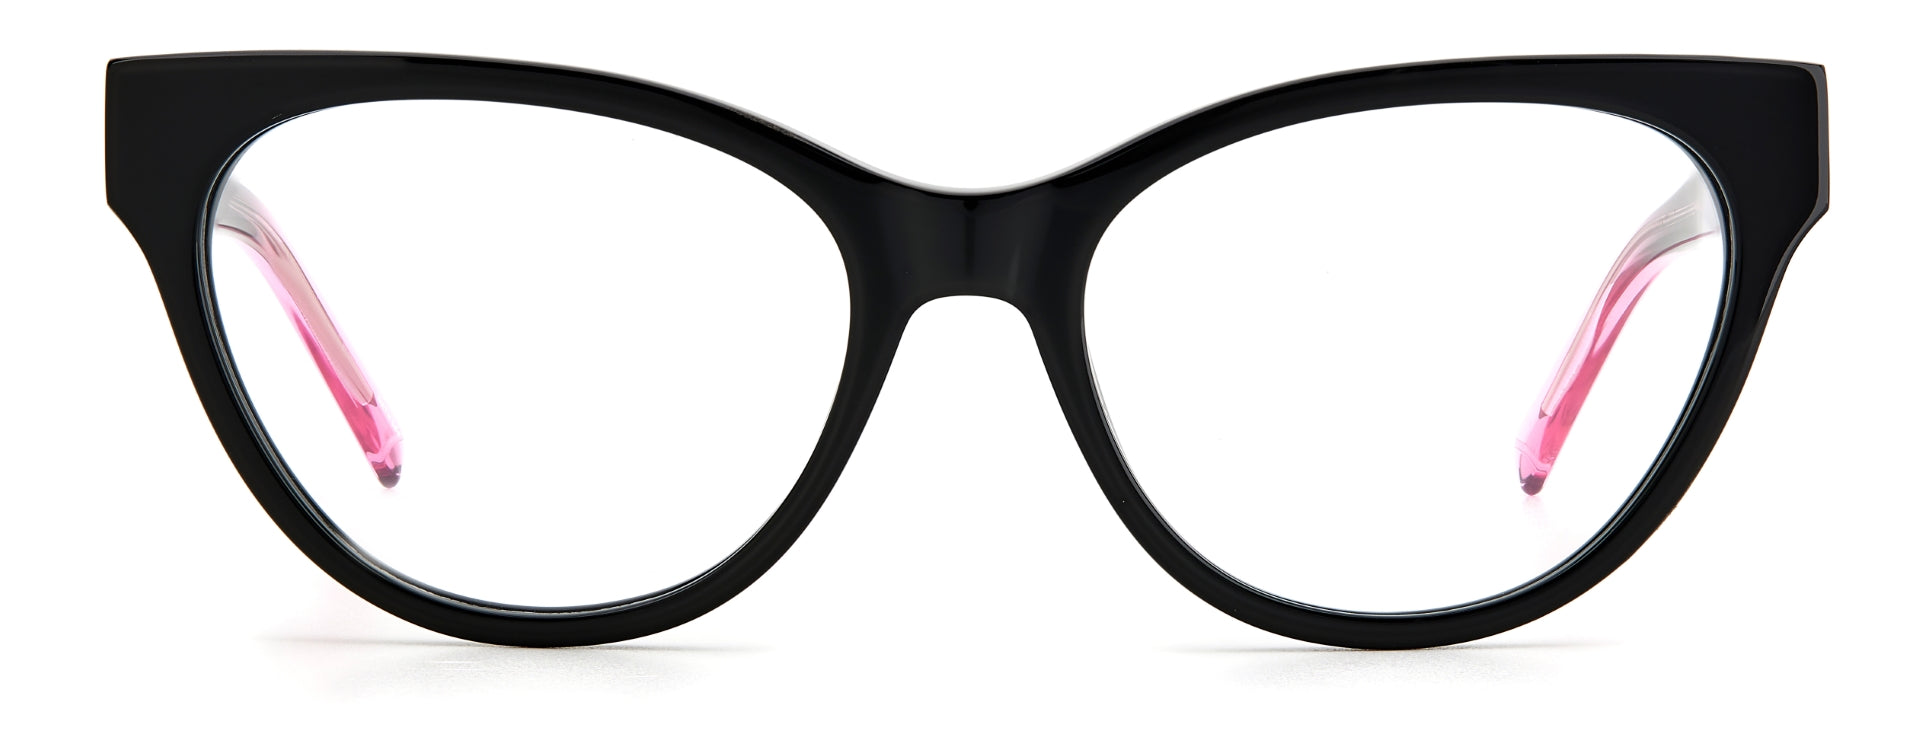 M MISSONI WOMAN CAT EYE Eyeglasses-MMI 0097 Size 53